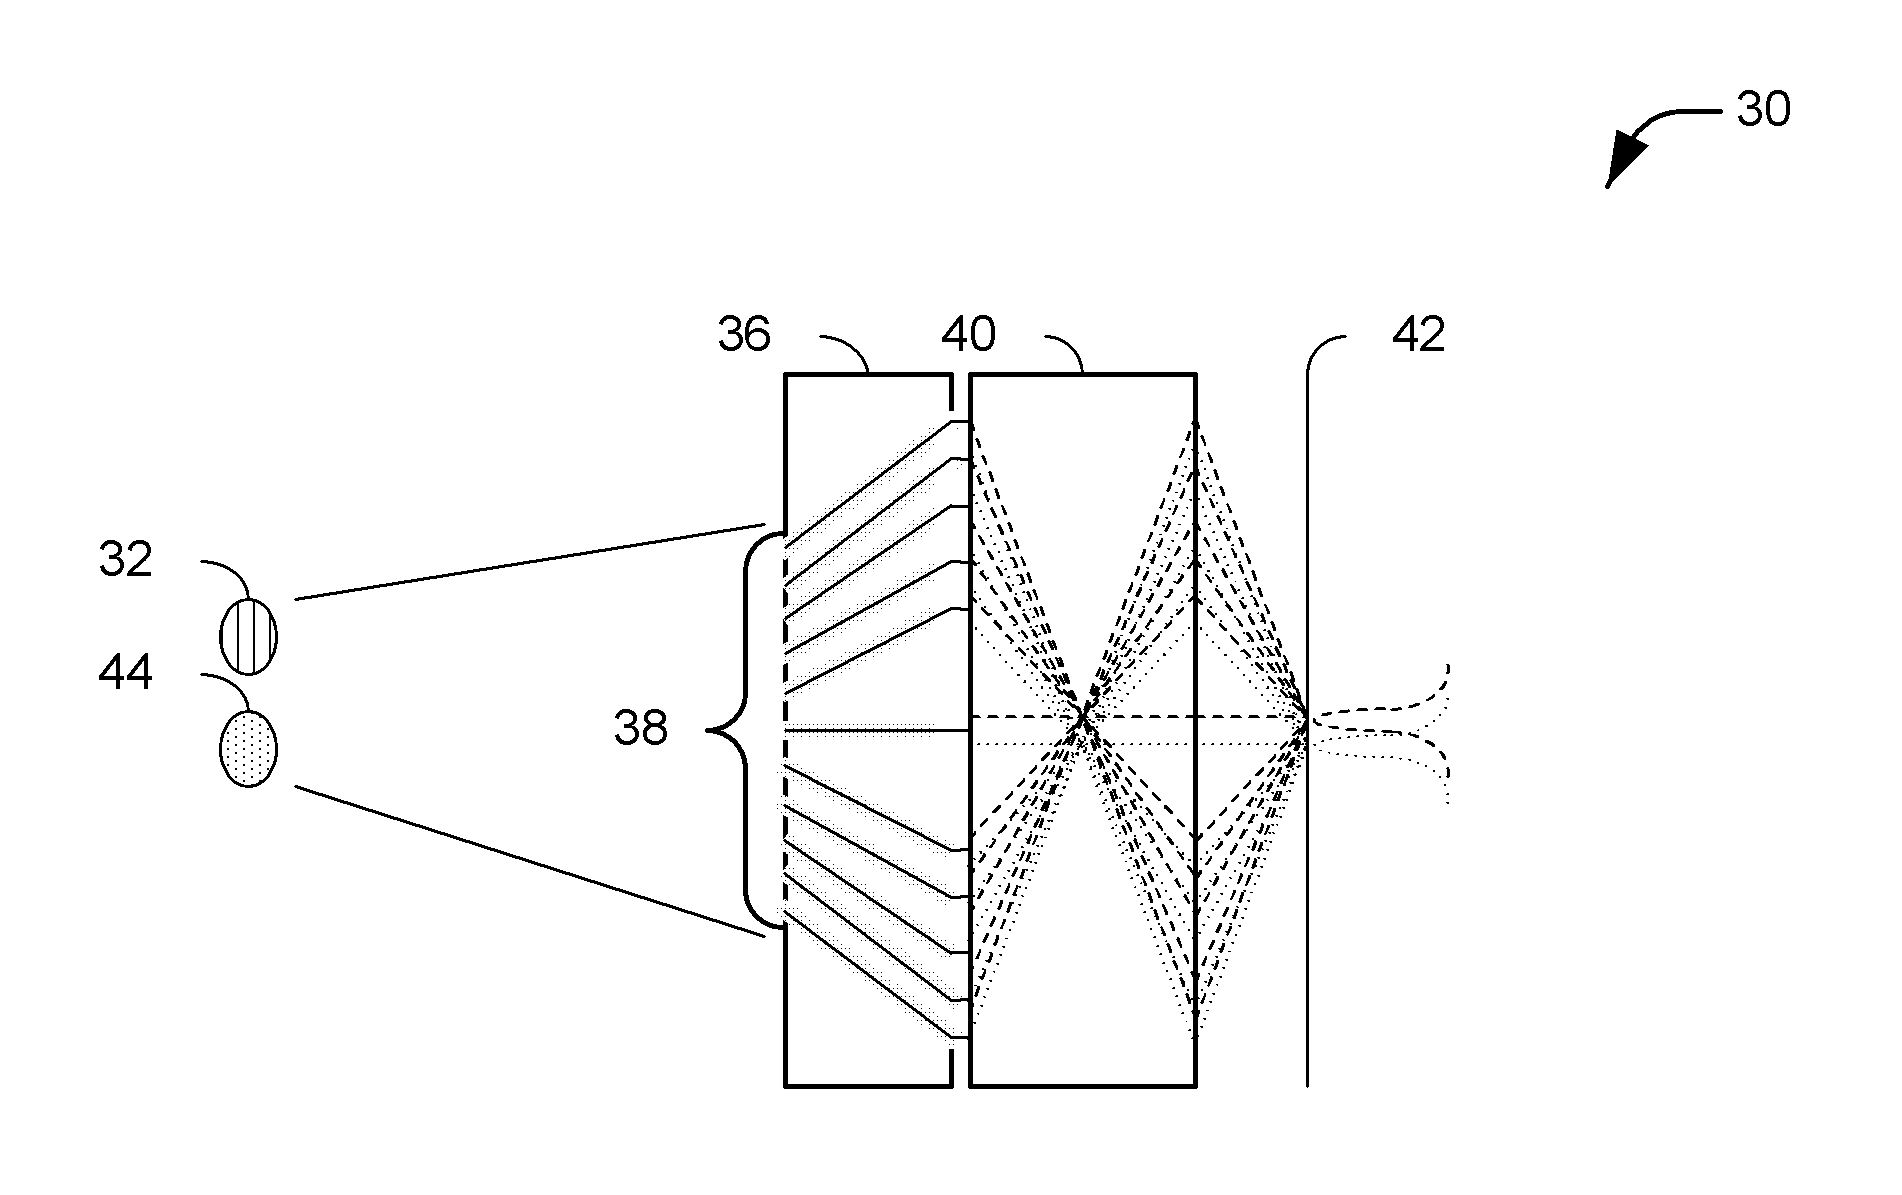 Imaging system using a negative index of refraction lens